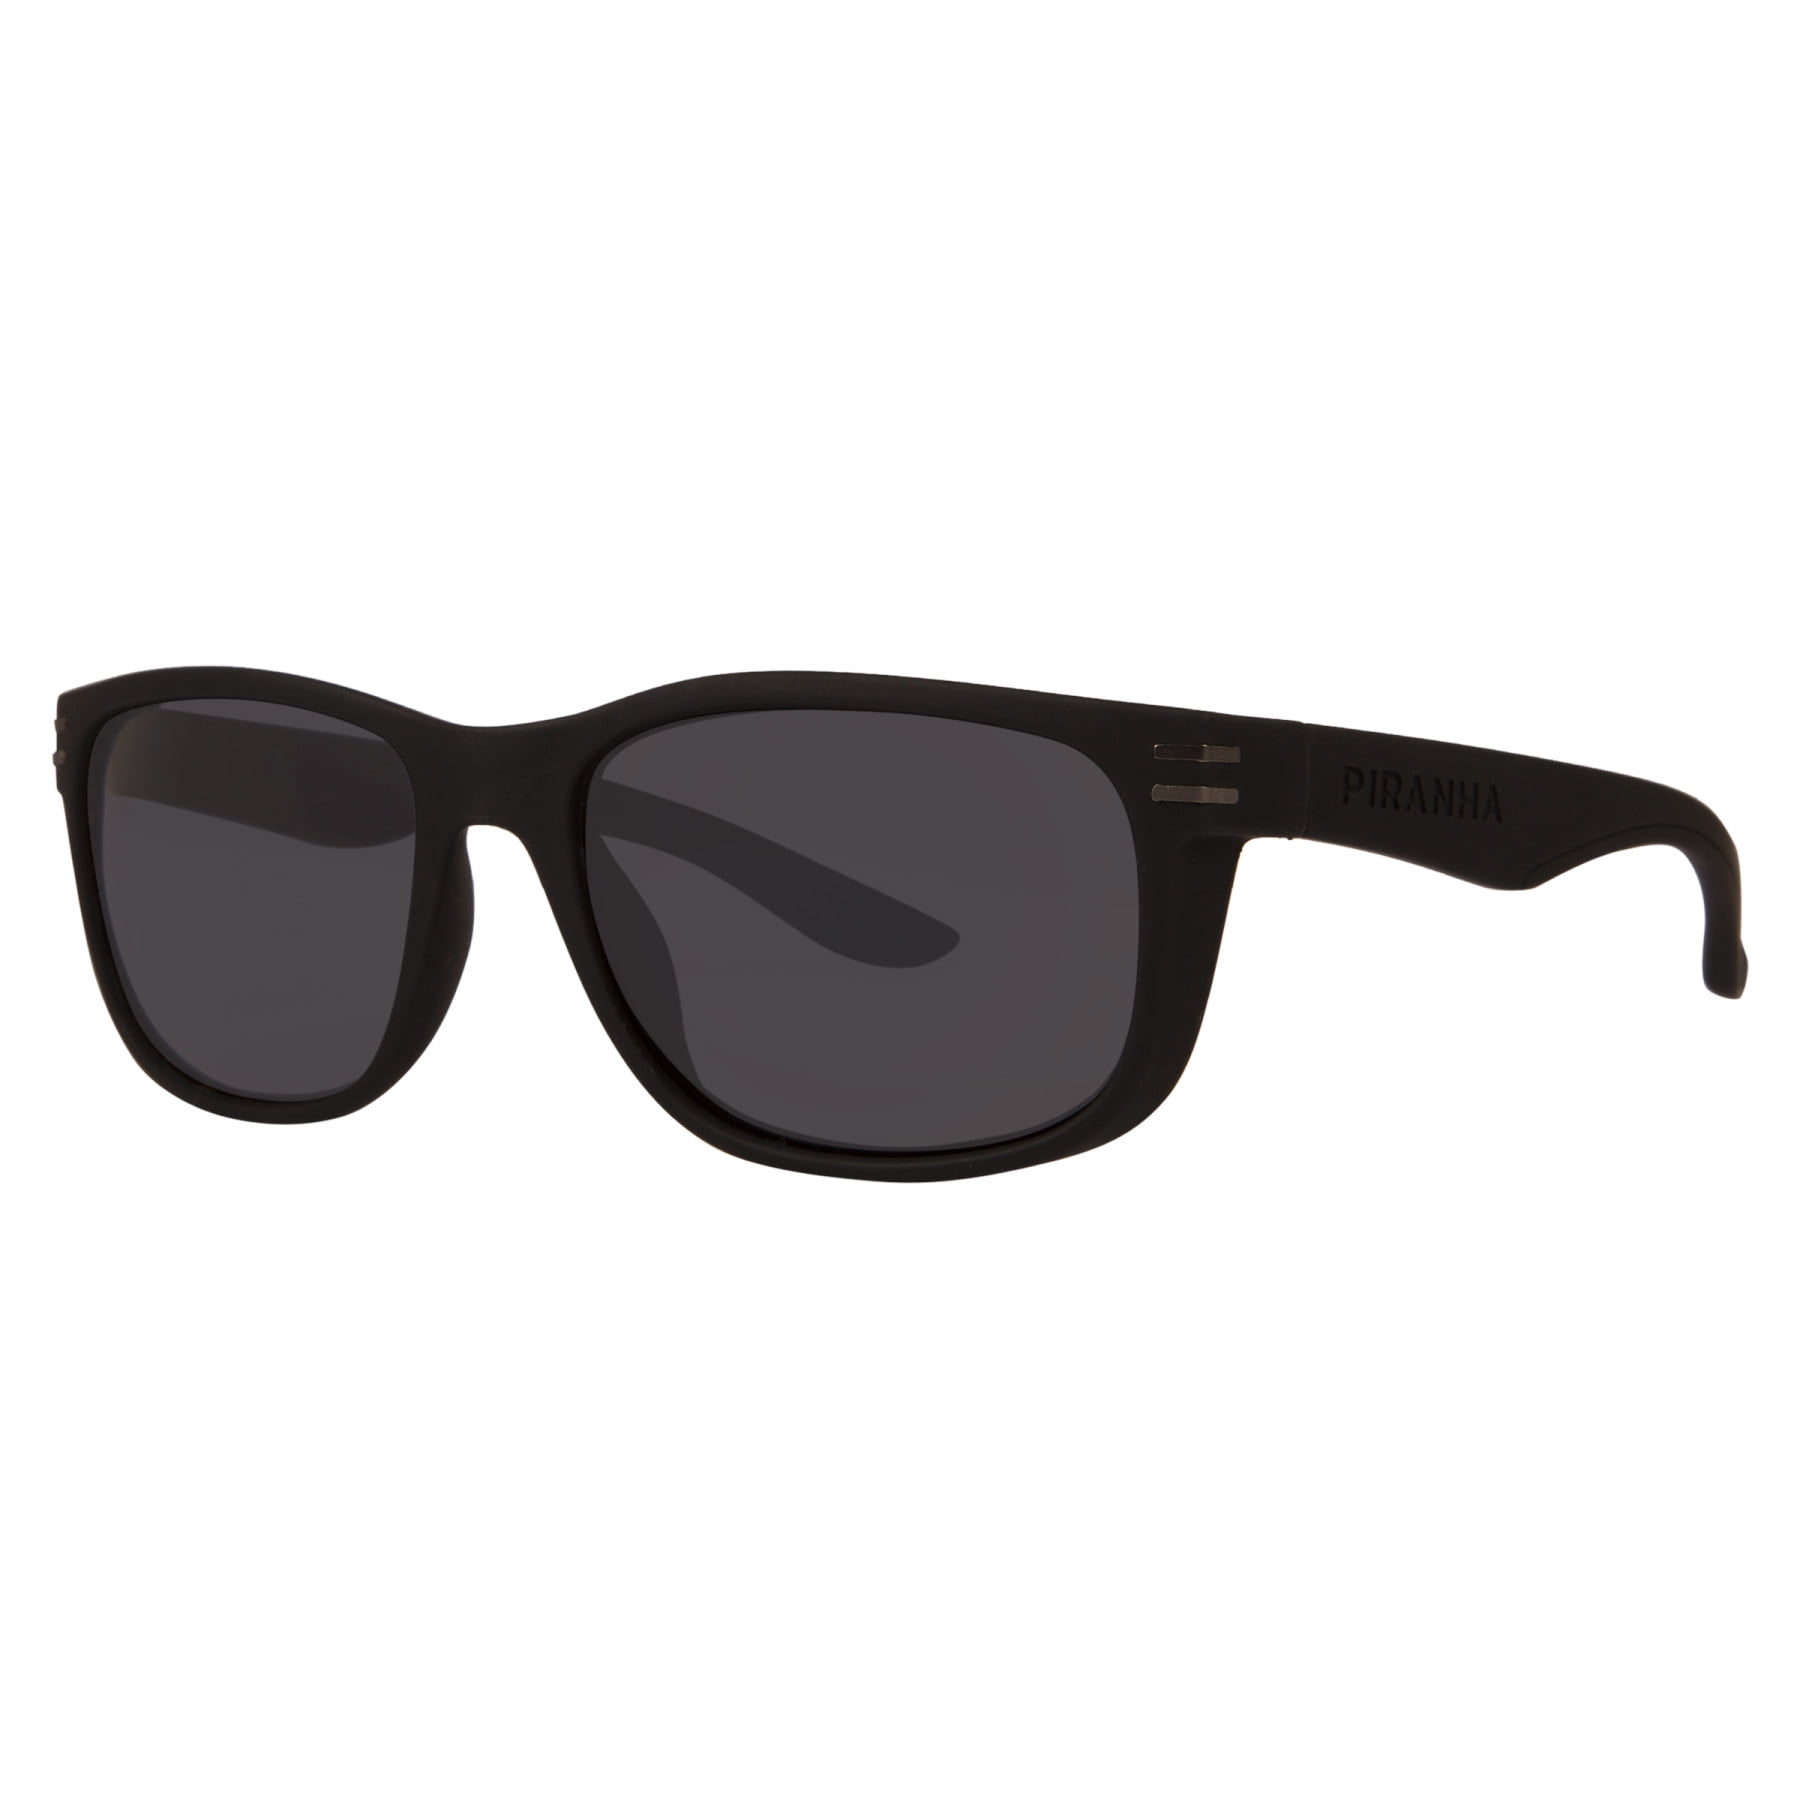 Piranha Reset Hydrofloat Black Frame Sunglasses with Smoke Polarized Lens  